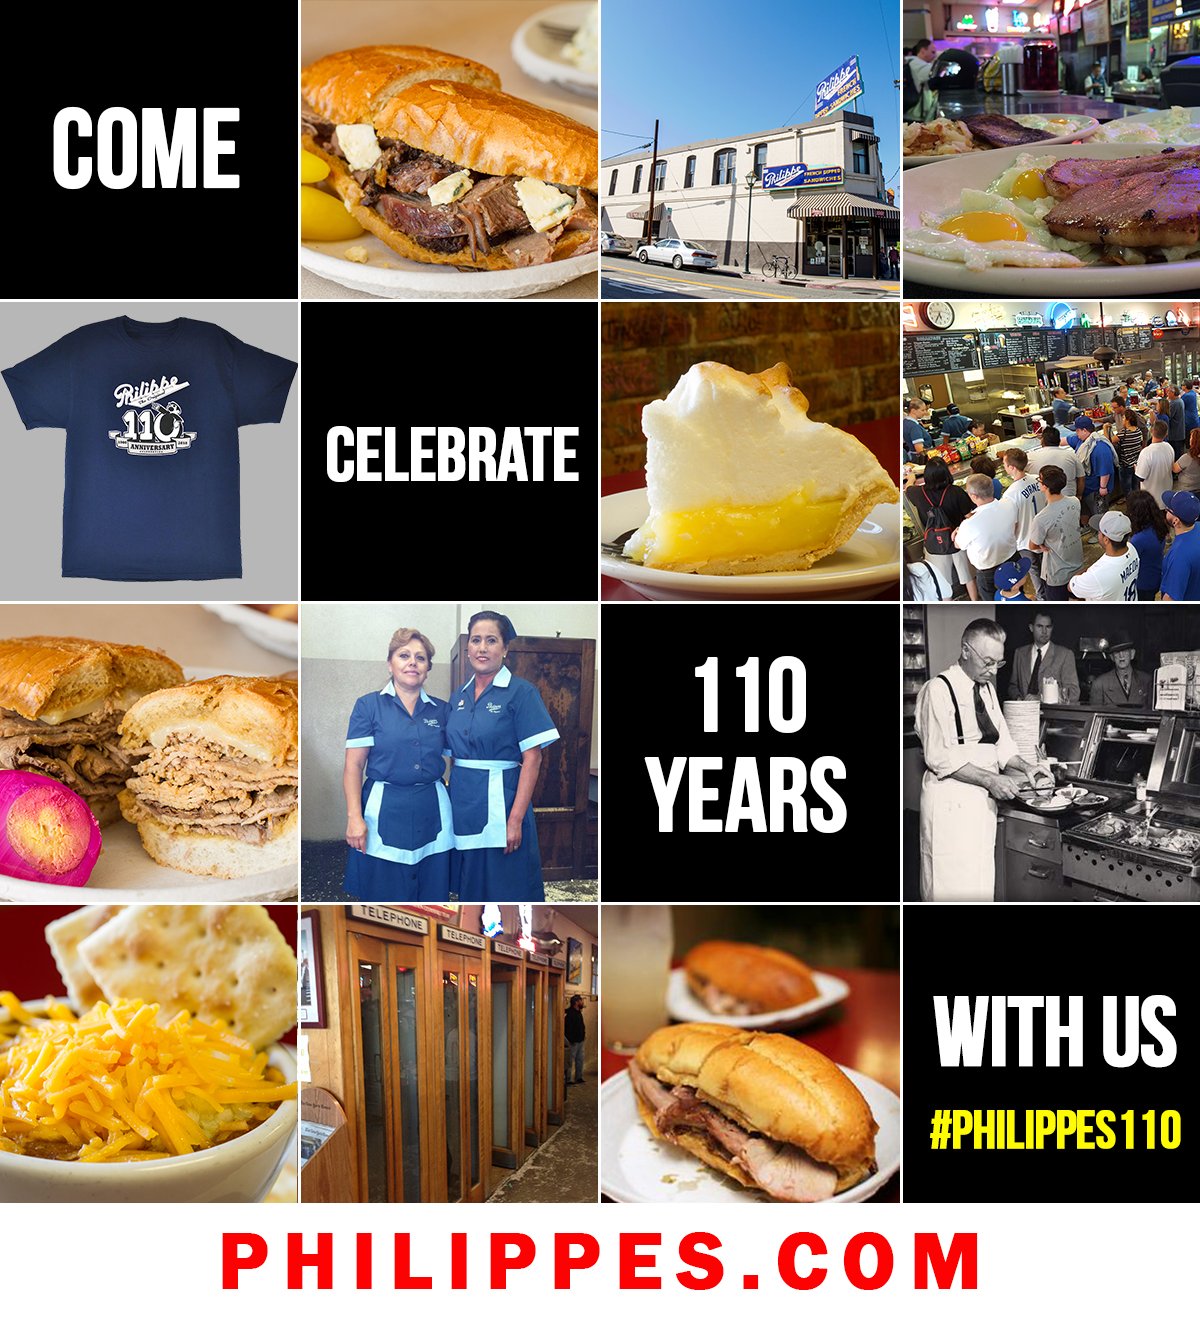 Philippe's Hosts 110th Anniversary Instagram Contest